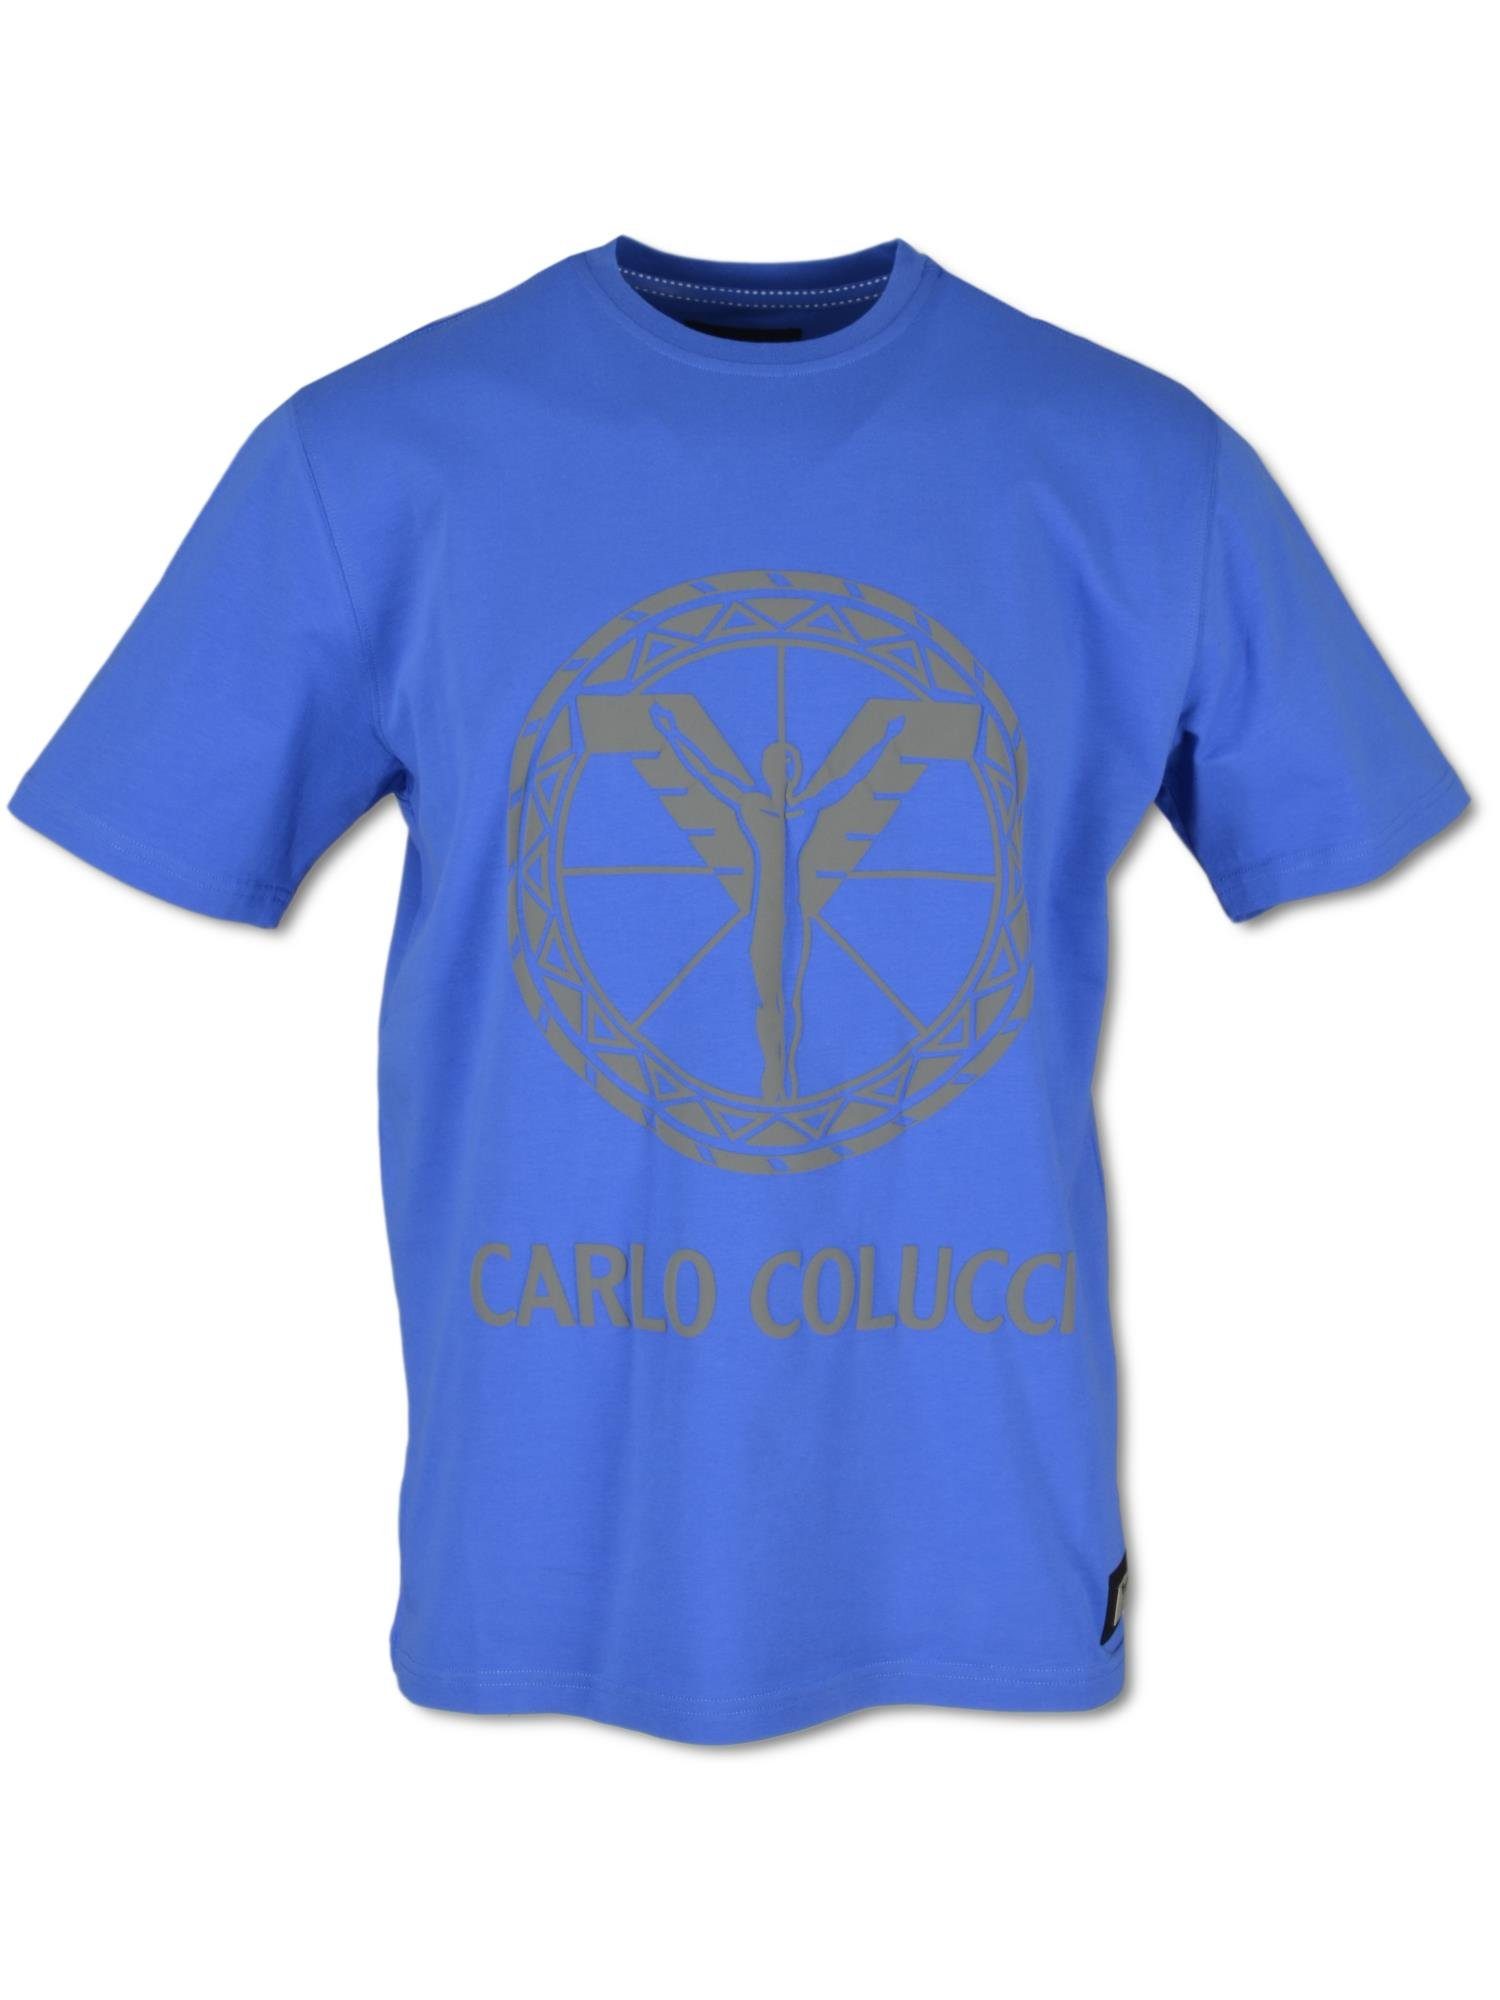 CARLO COLUCCI T-Shirt Cani Azur